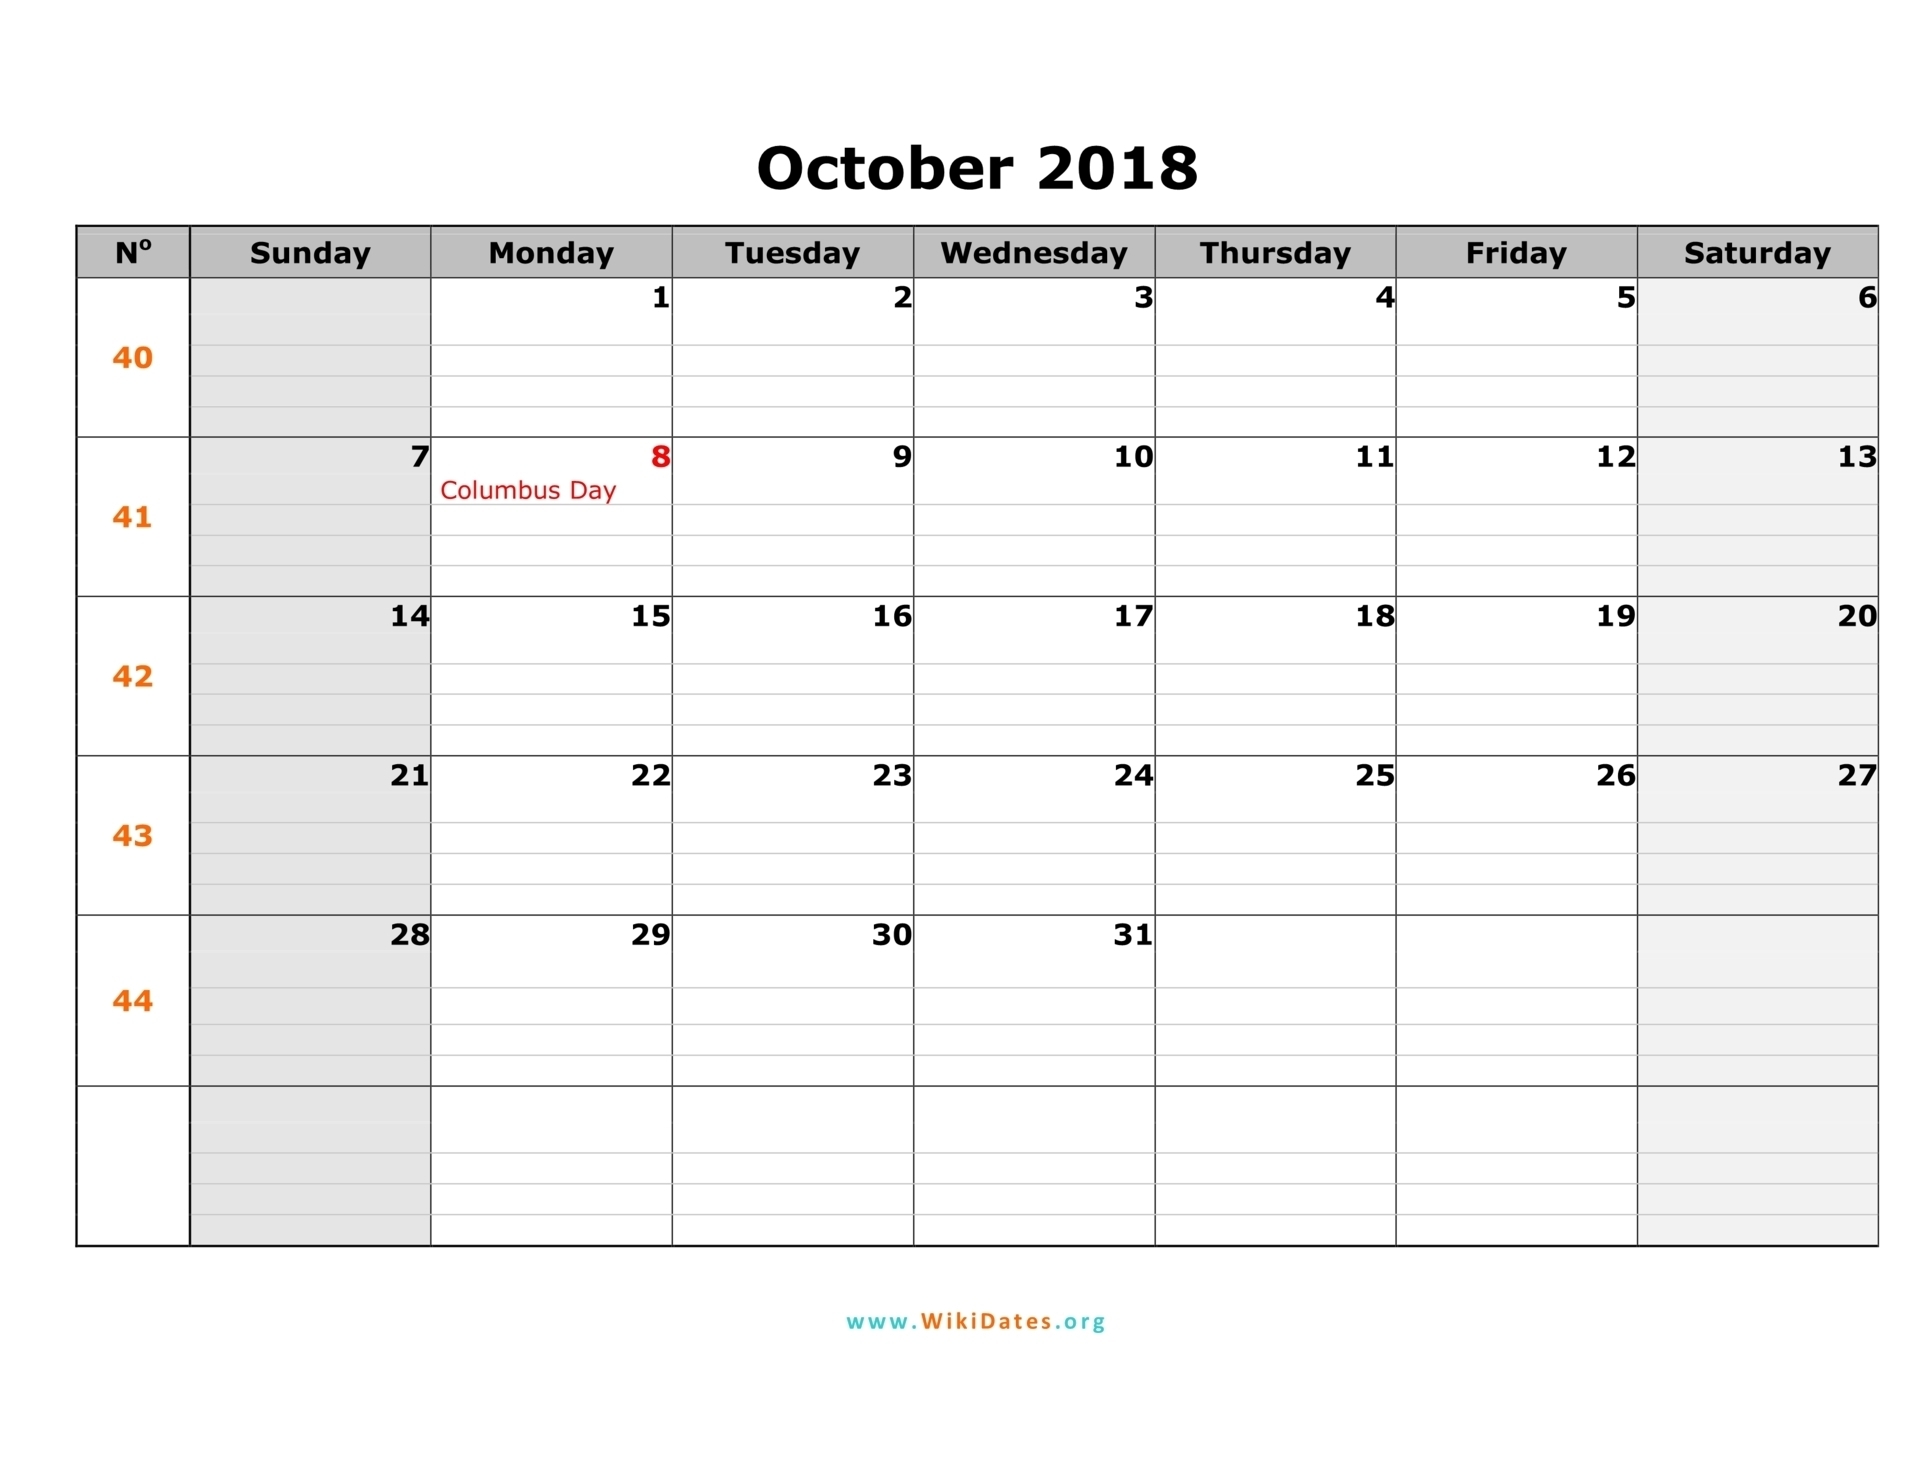 October 2018 Calendar | Wikidates